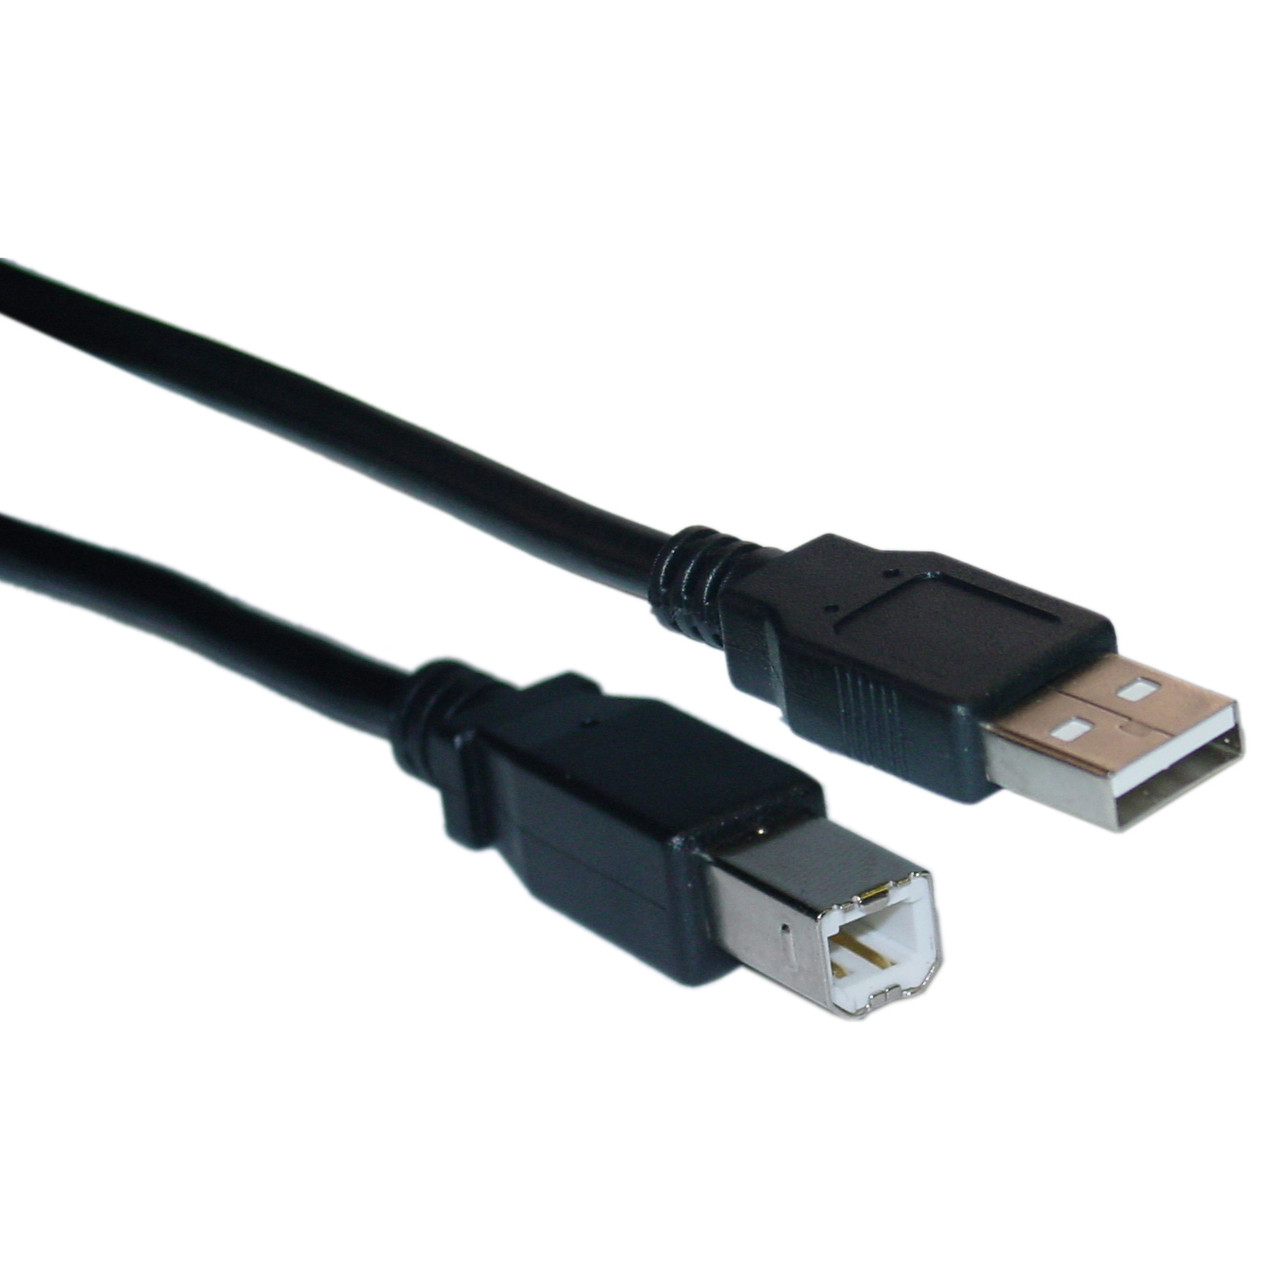 6 Foot USB A to B Printer Printer Cable, Black, 243-006-BK (CTG-28102)